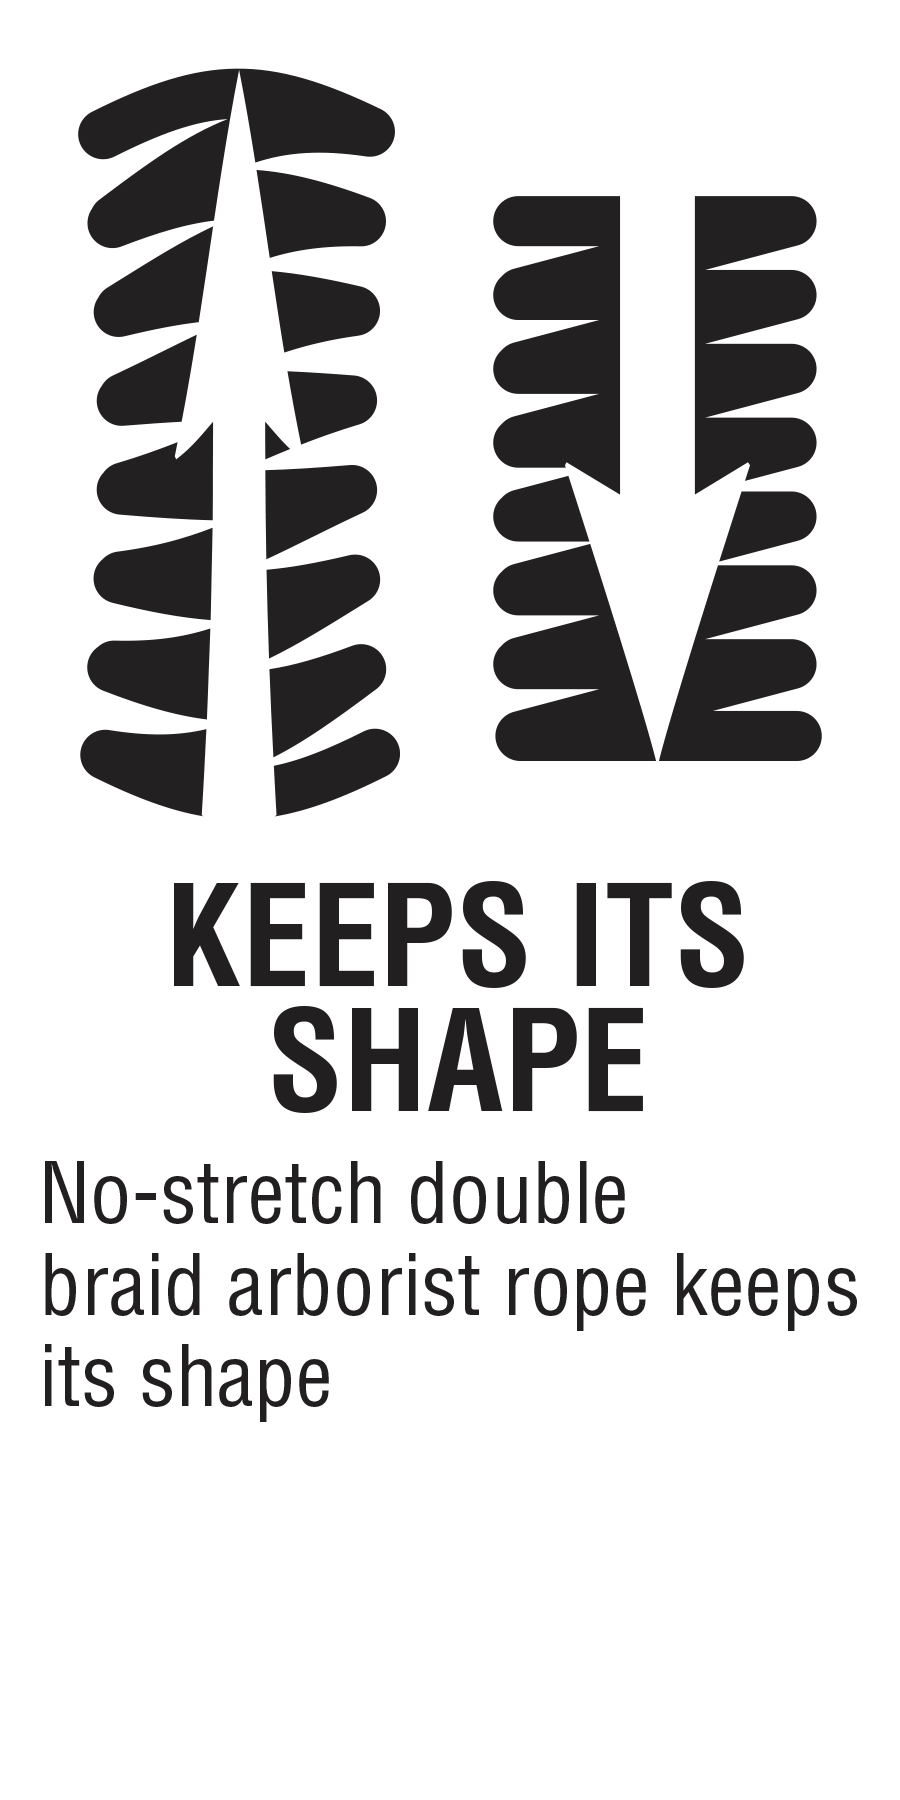 No-stretch double braid arborist rope keeps its shape